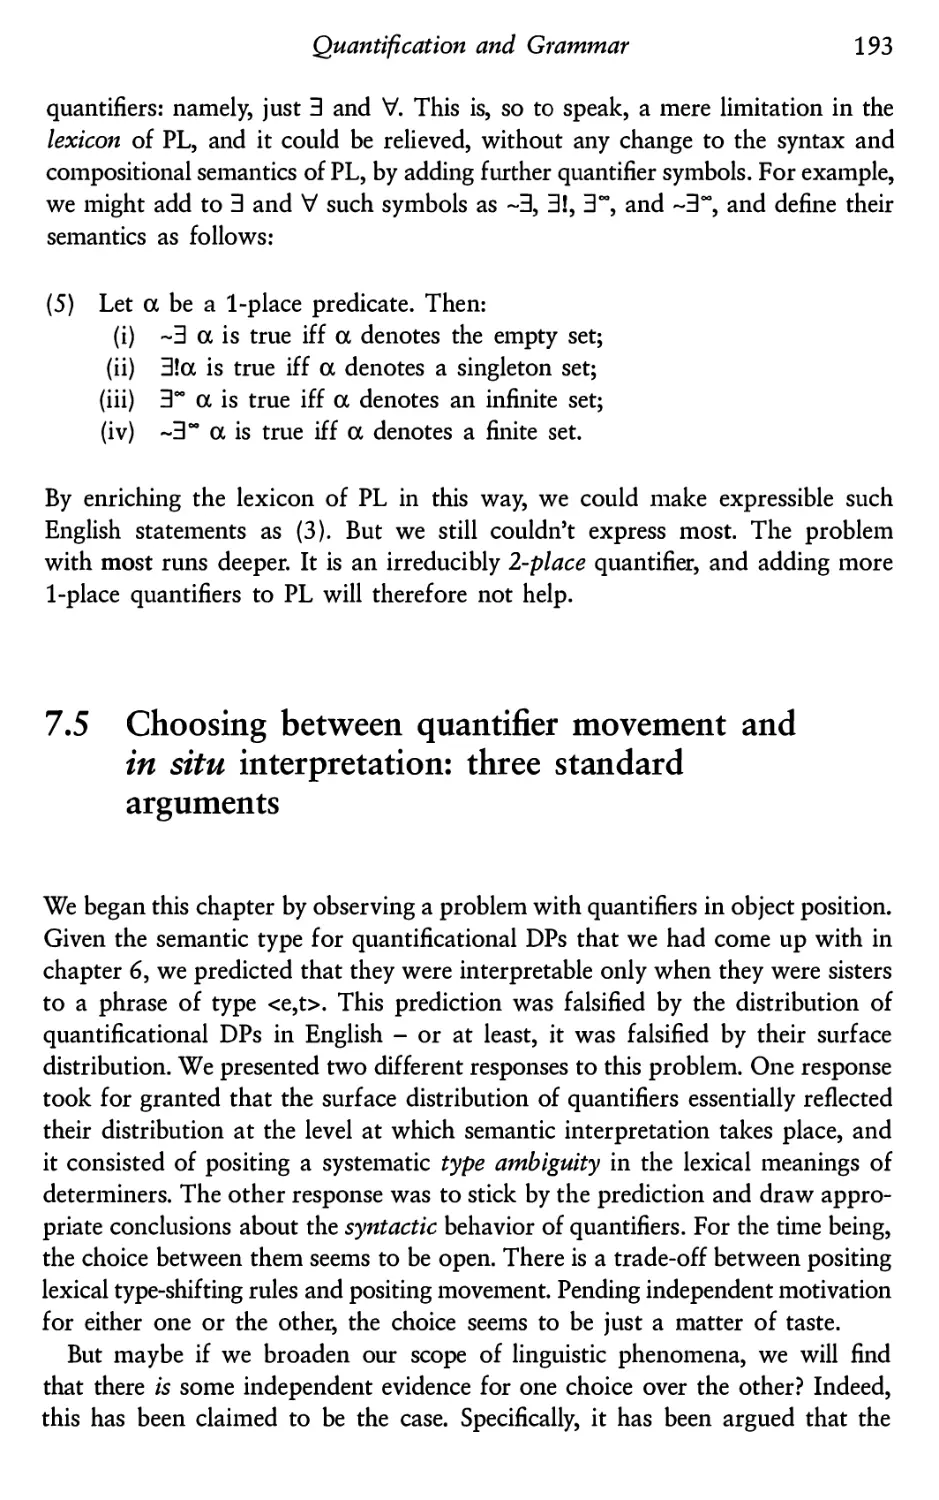 7.5 Choosing between quantifier movement and in situ interpretation: three standard arguments